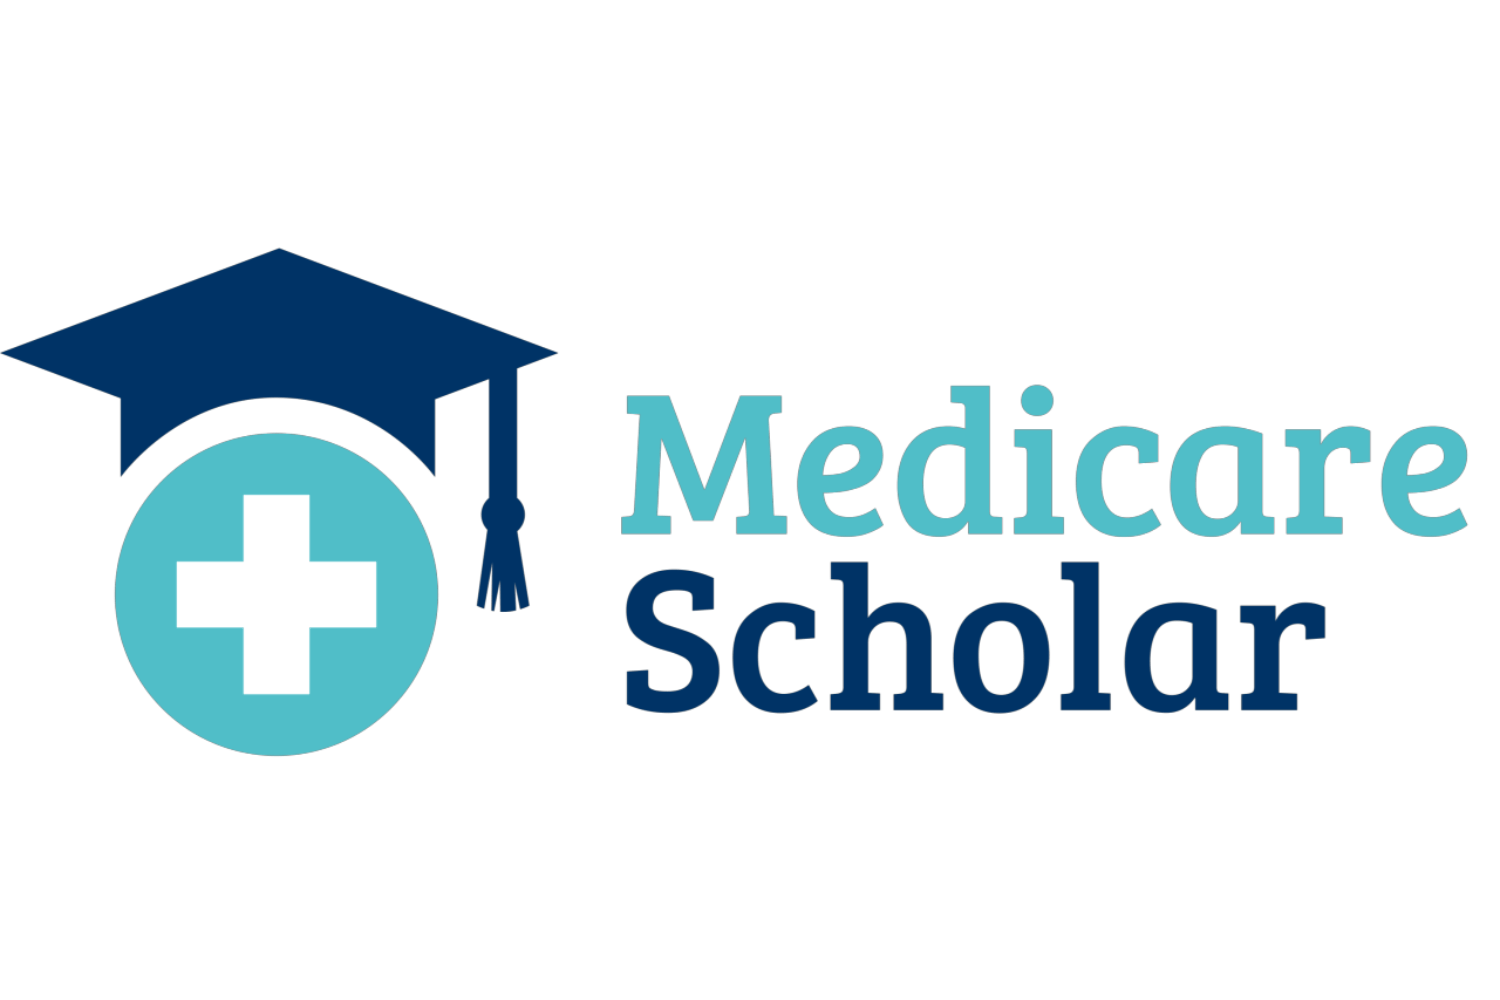 Medicare Scholar